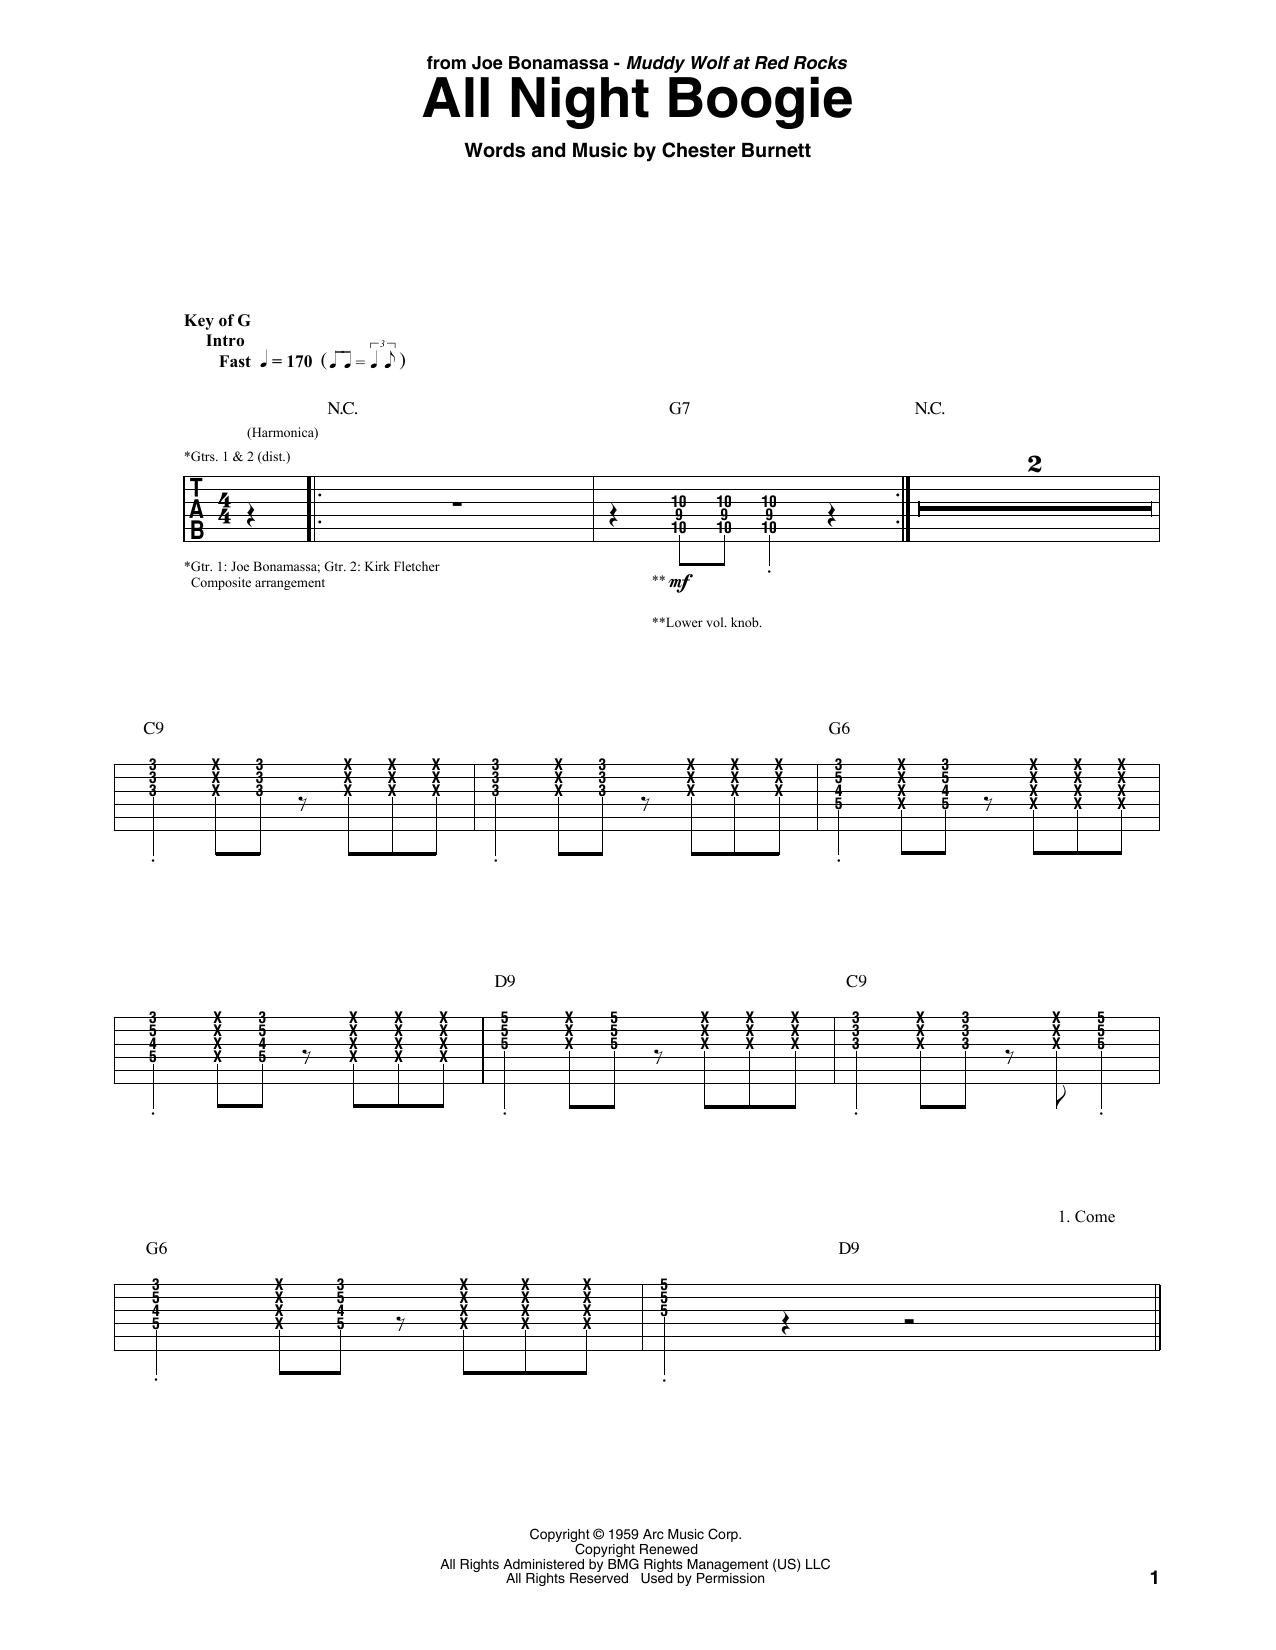 Joe Bonamassa All Night Boogie Sheet Music Notes & Chords for Guitar Tab - Download or Print PDF